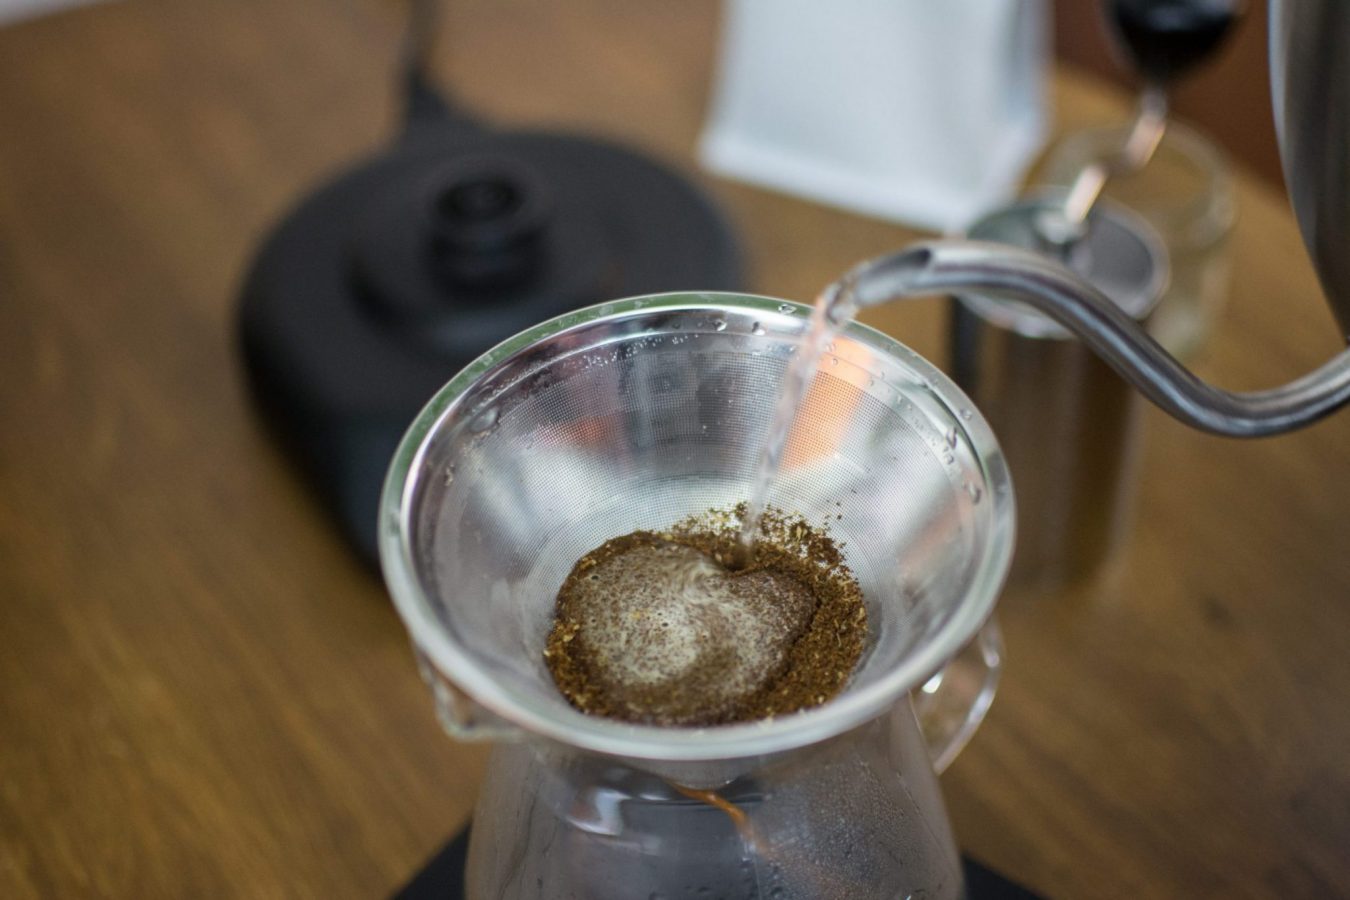 kawa - ikea - coffee plant - drip